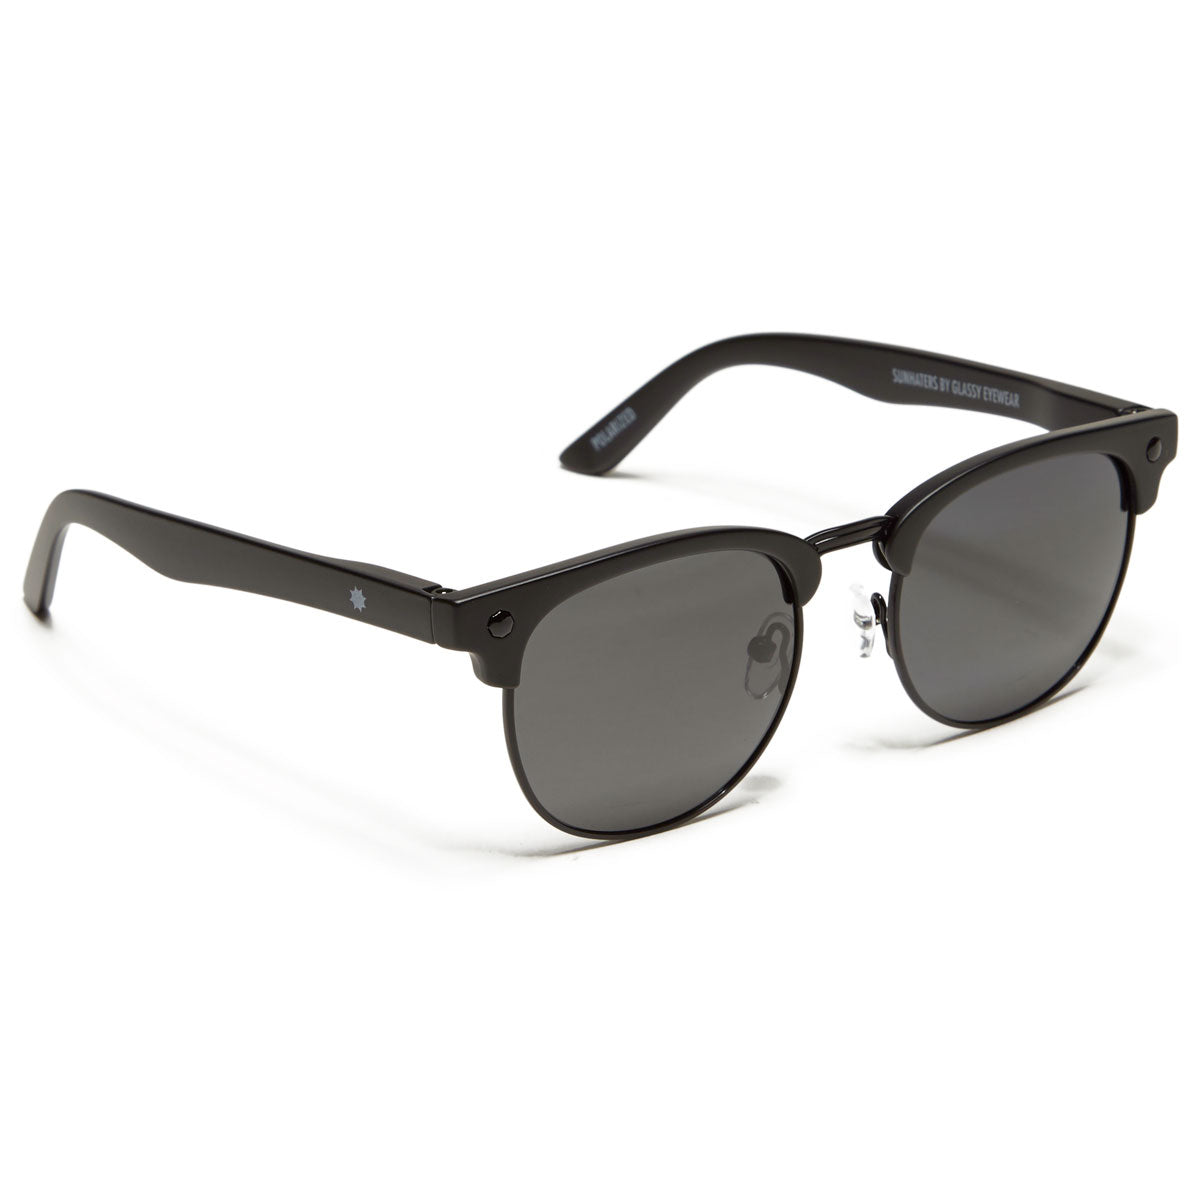 Glassy Morrison Polarized Sunglasses - Matte Black image 1